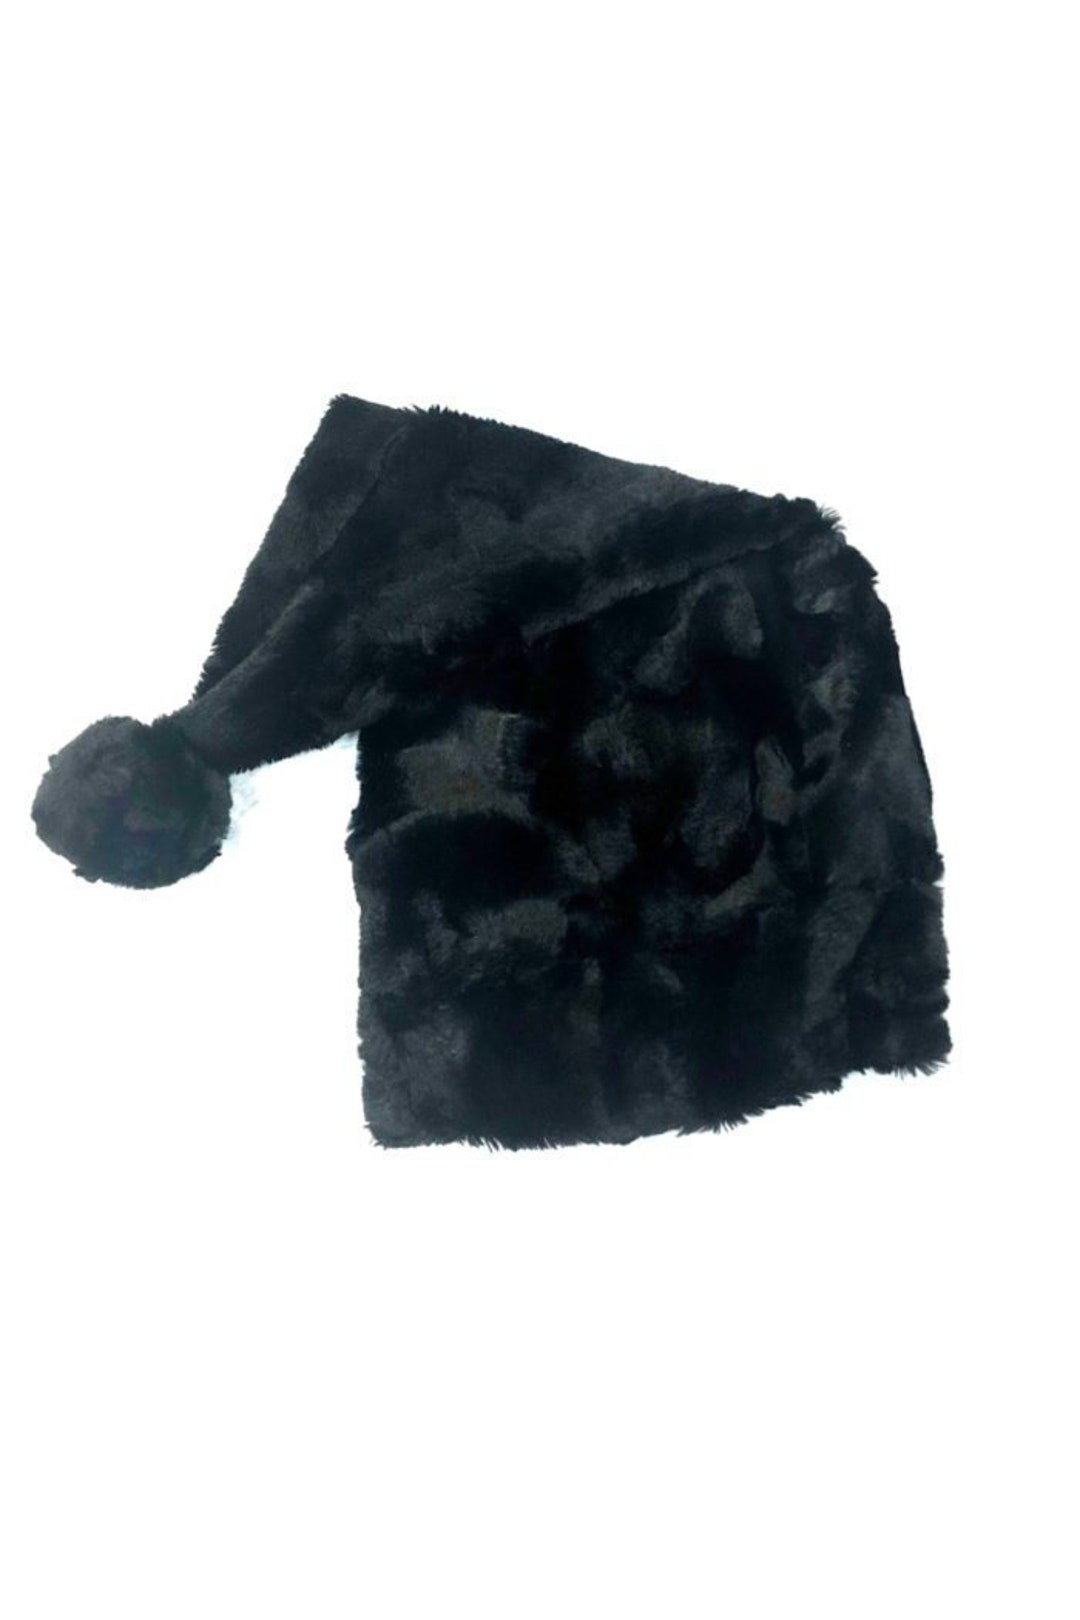 Gothic Santa Hat All Black Minky Faux Fur Trim and Pompom 156623 - Etsy